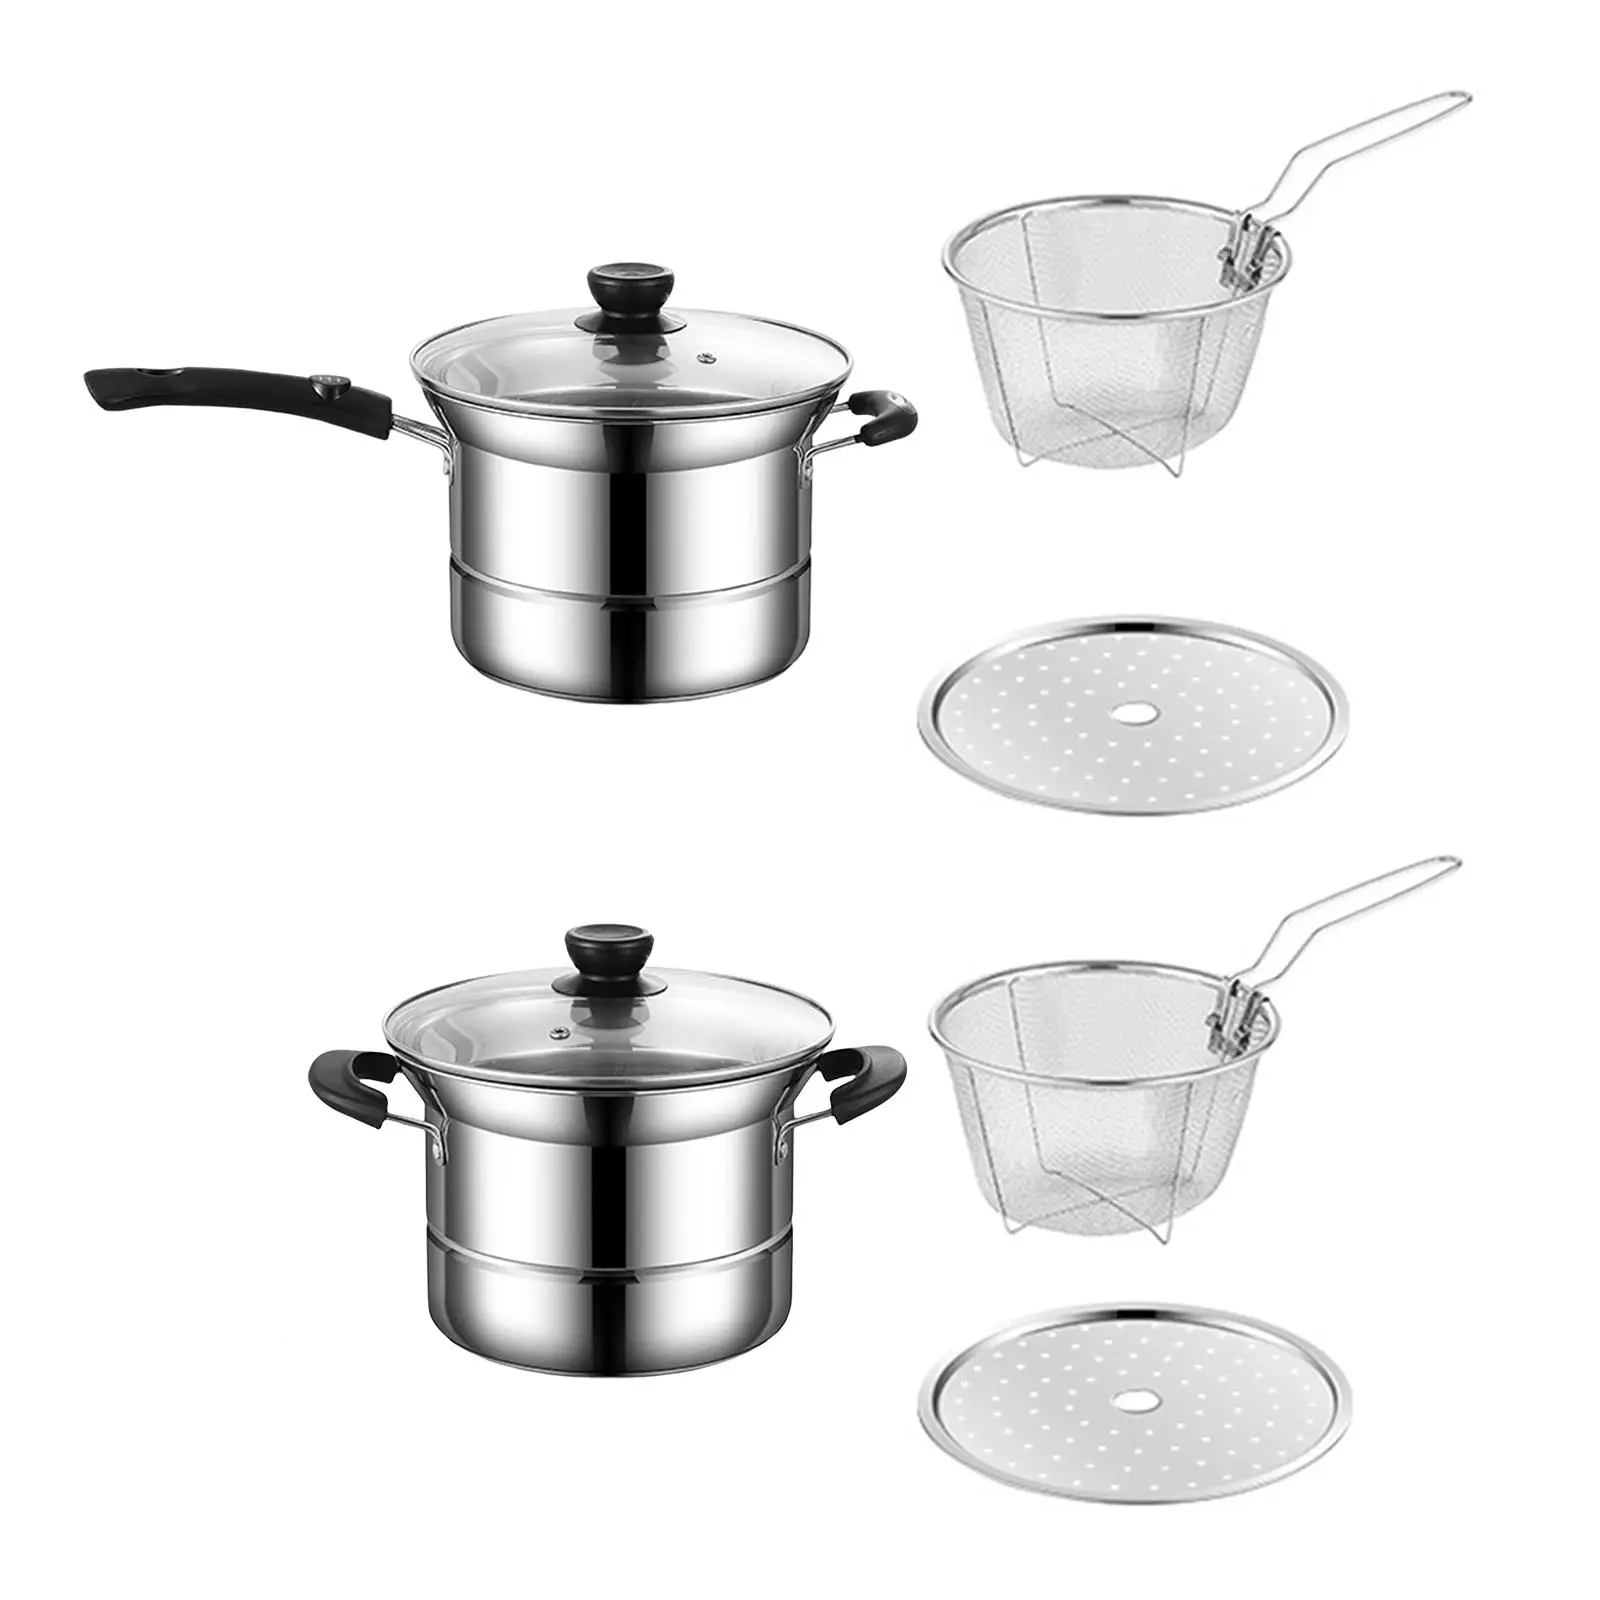 Sauce Pan Milk Pan Cookware Sets Cooker Utensils Universal Cooking Pot for Restaurant Kitchen Cooking Camping Dining Room